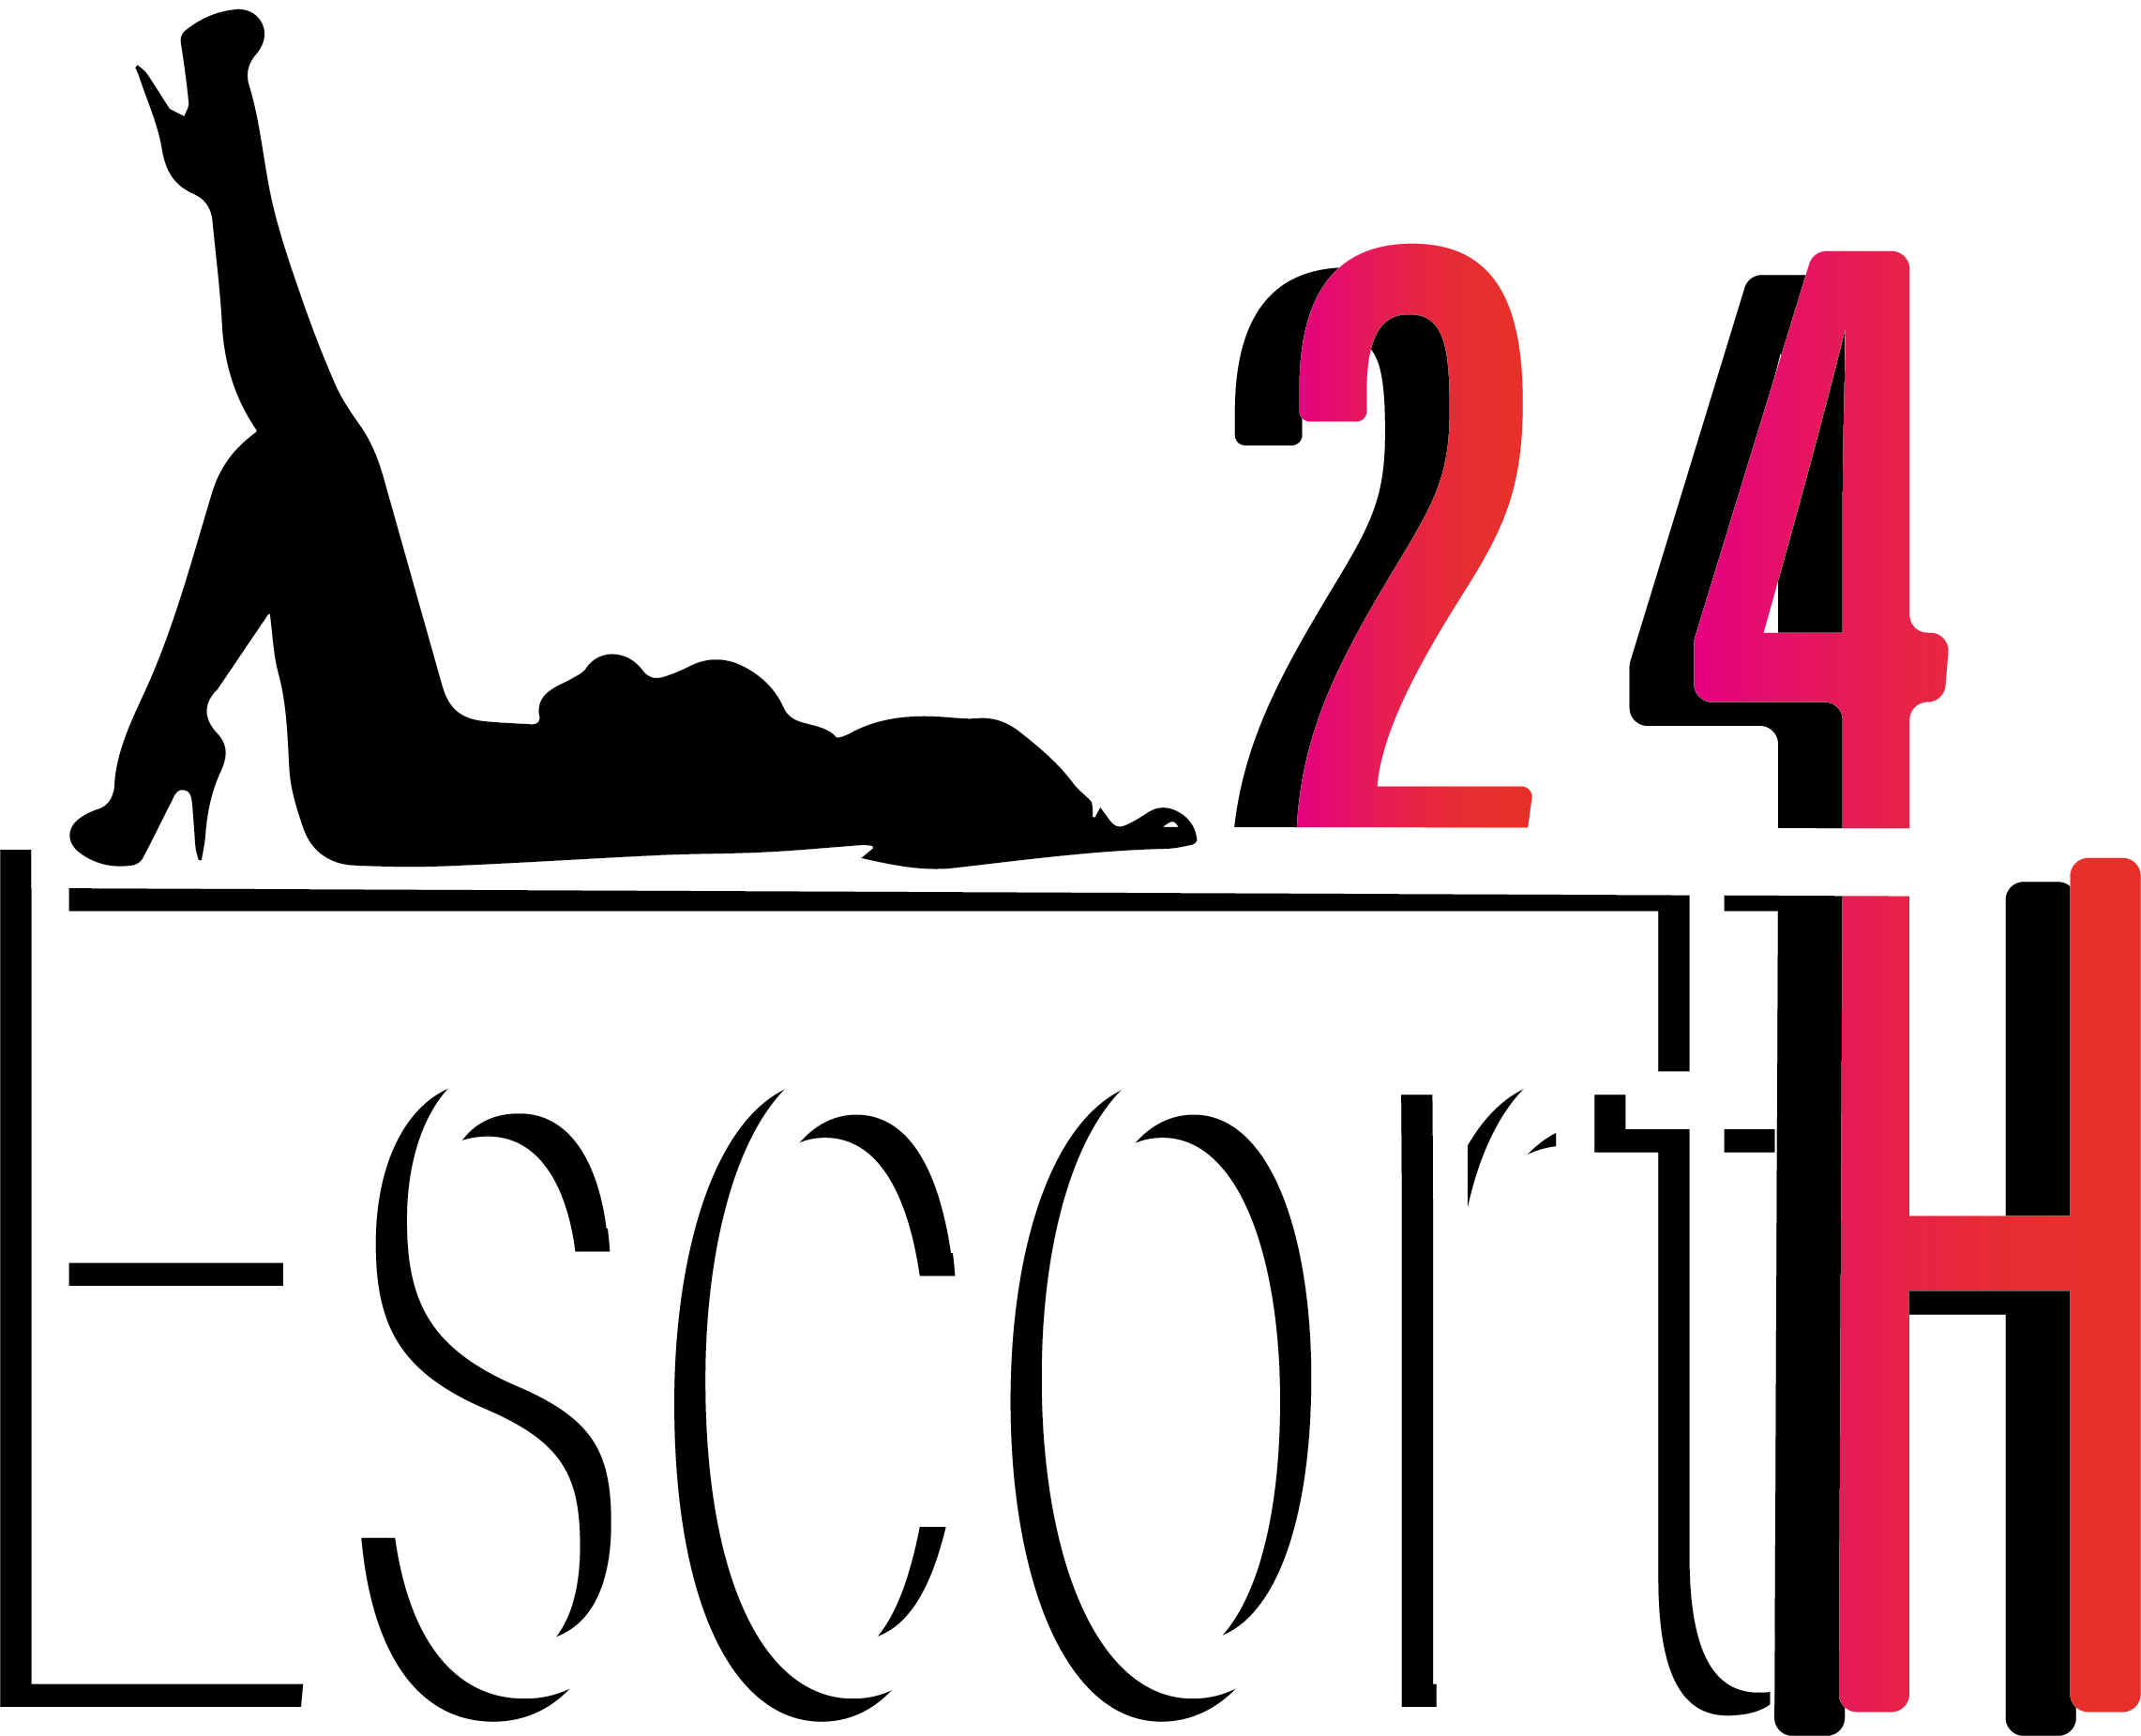 www.escort24h.co.il - Escort Israel